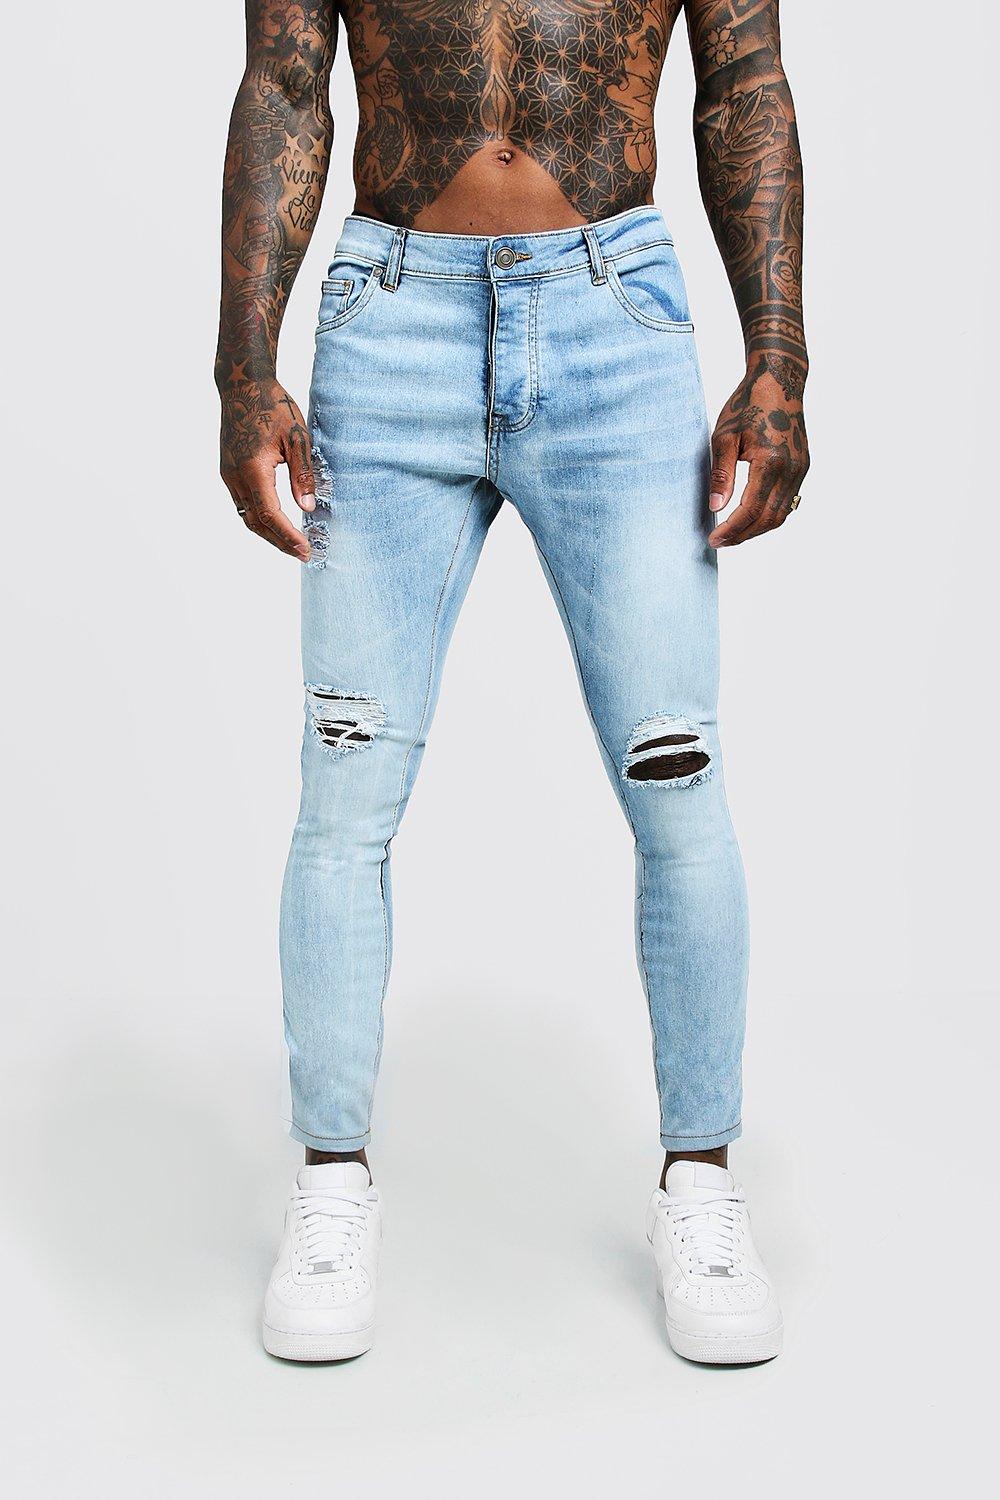 side tape jeans mens